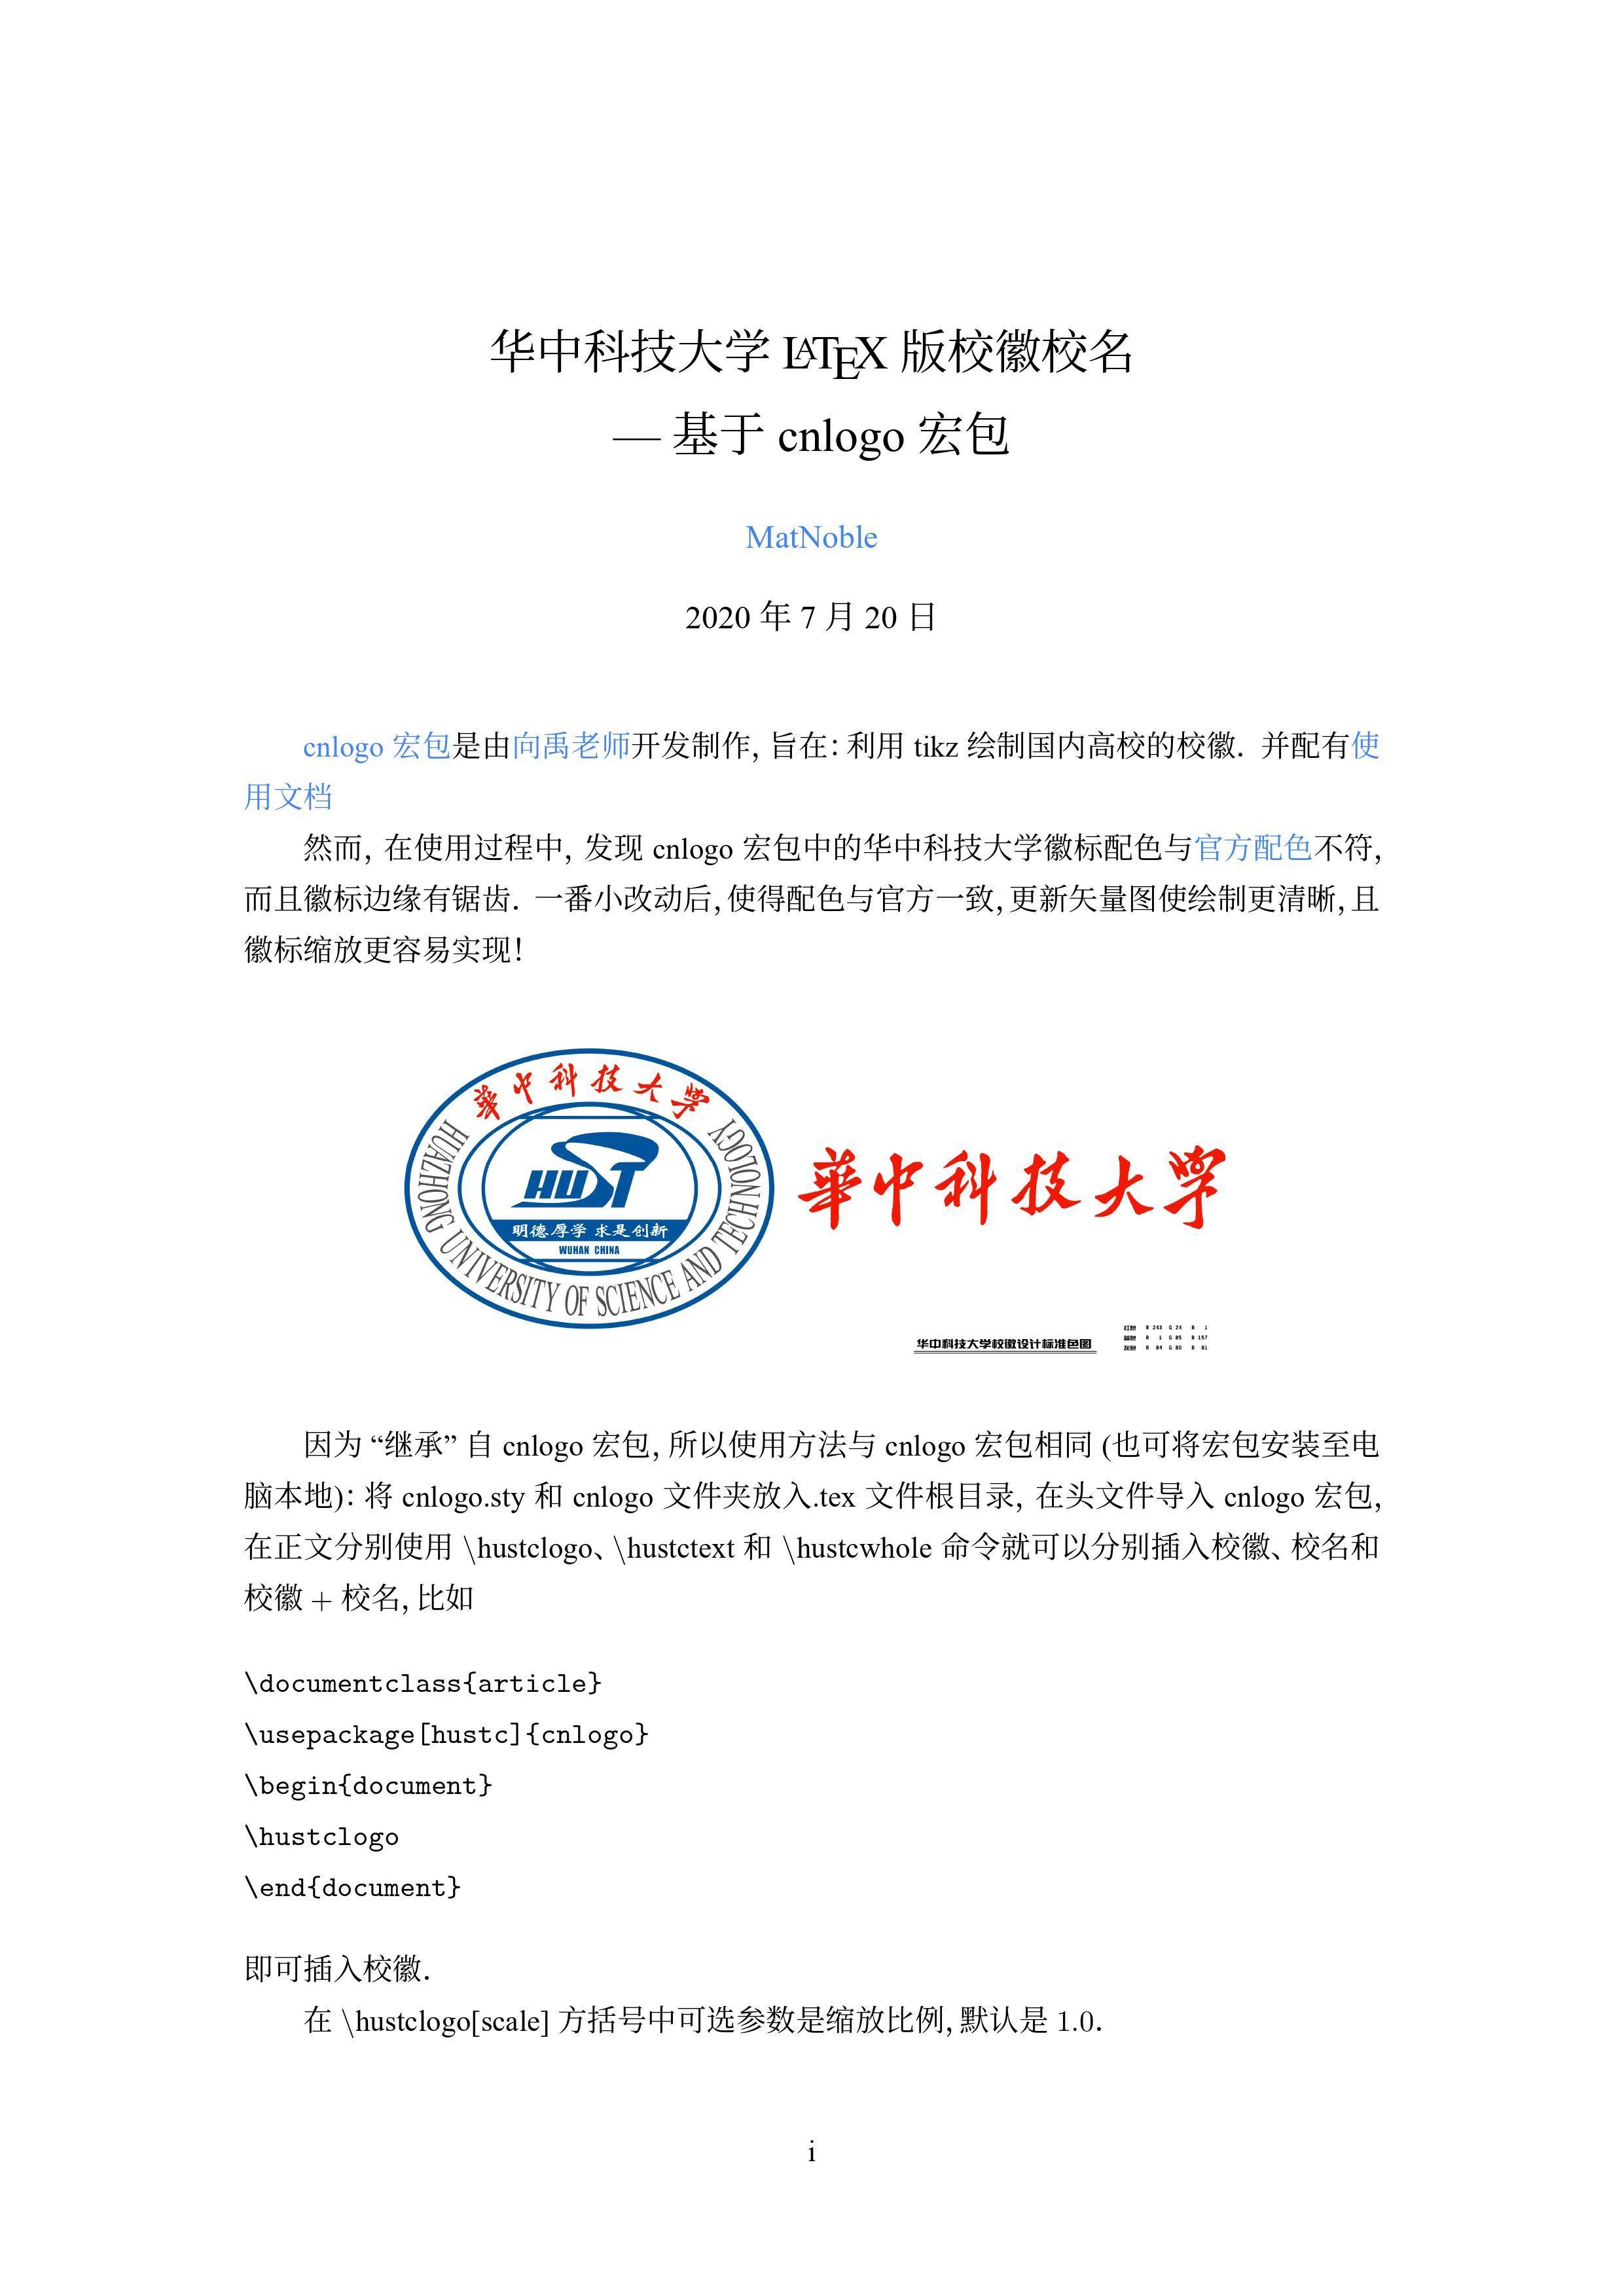 华中科技大学 LaTeX 版徽标分享 - LaTeX 工作室